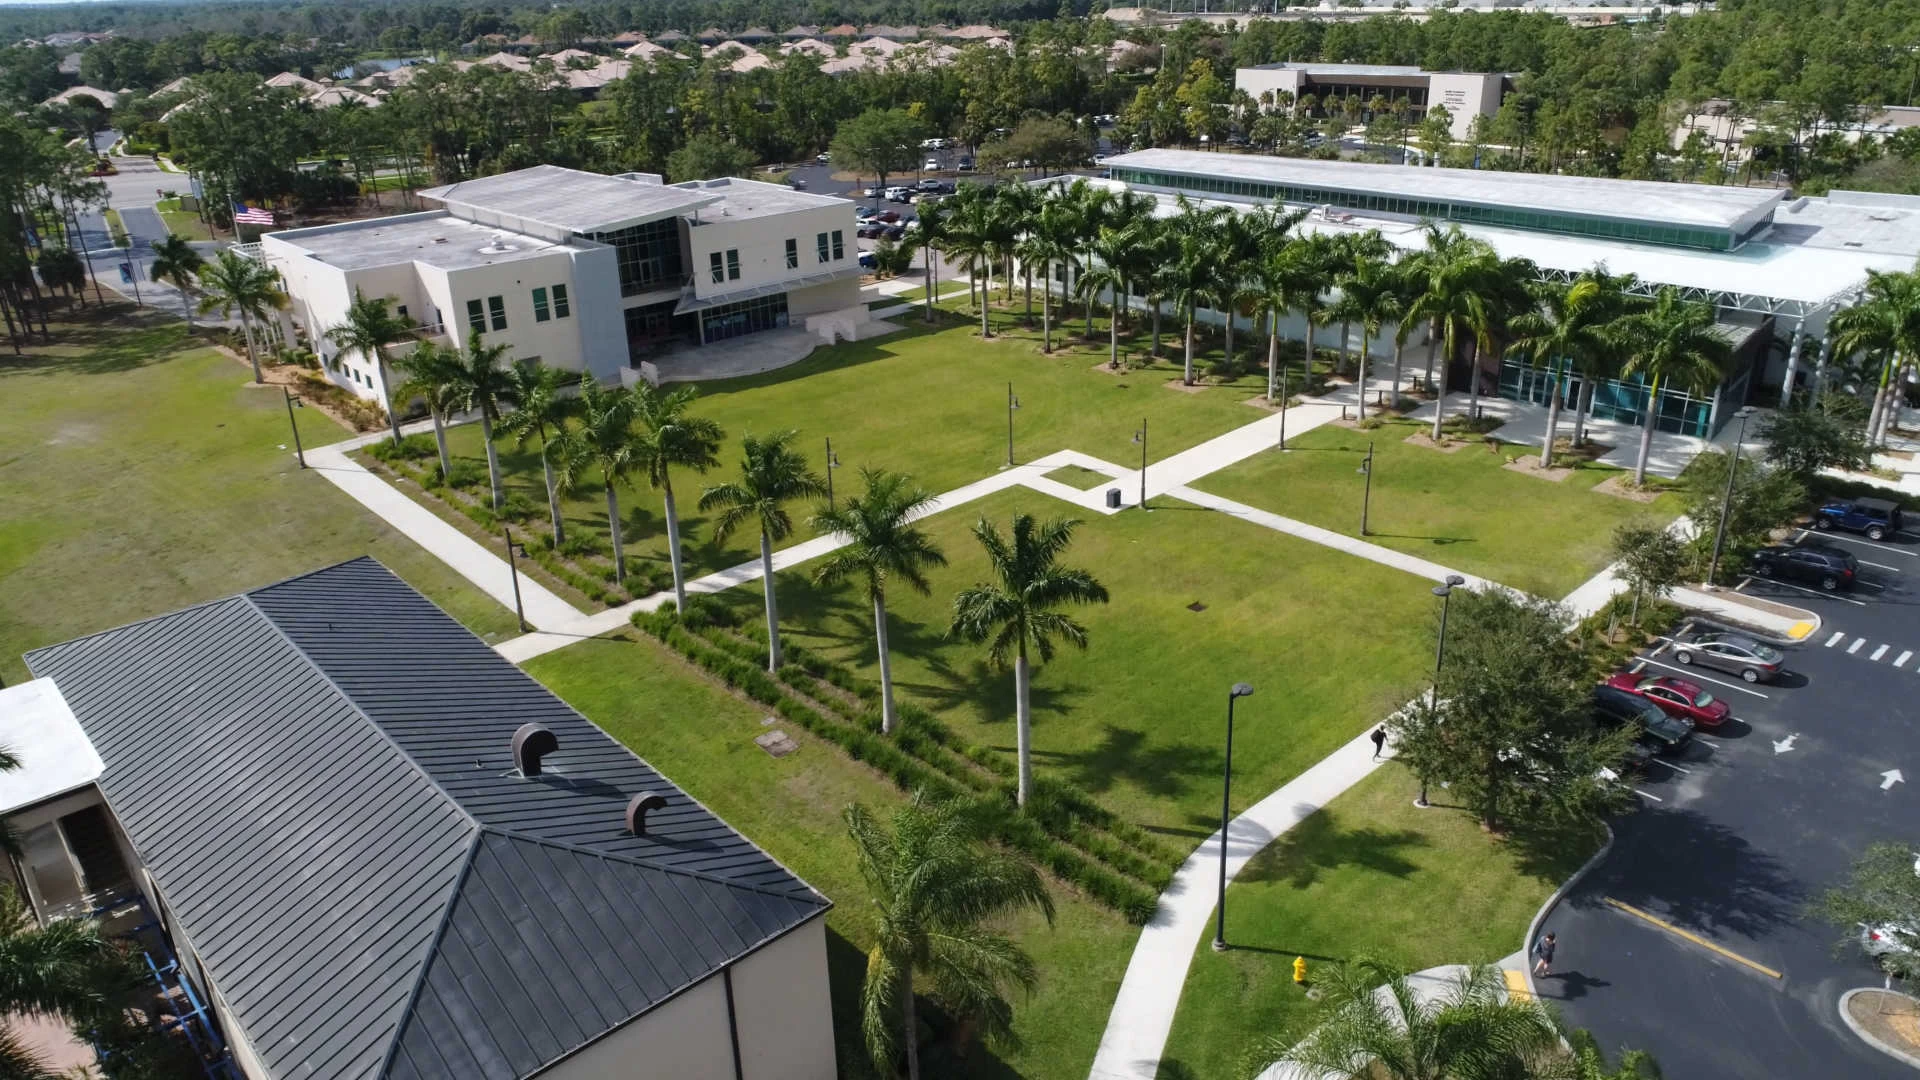 The campus of Florida Gulf Coast University in Southwest Florida